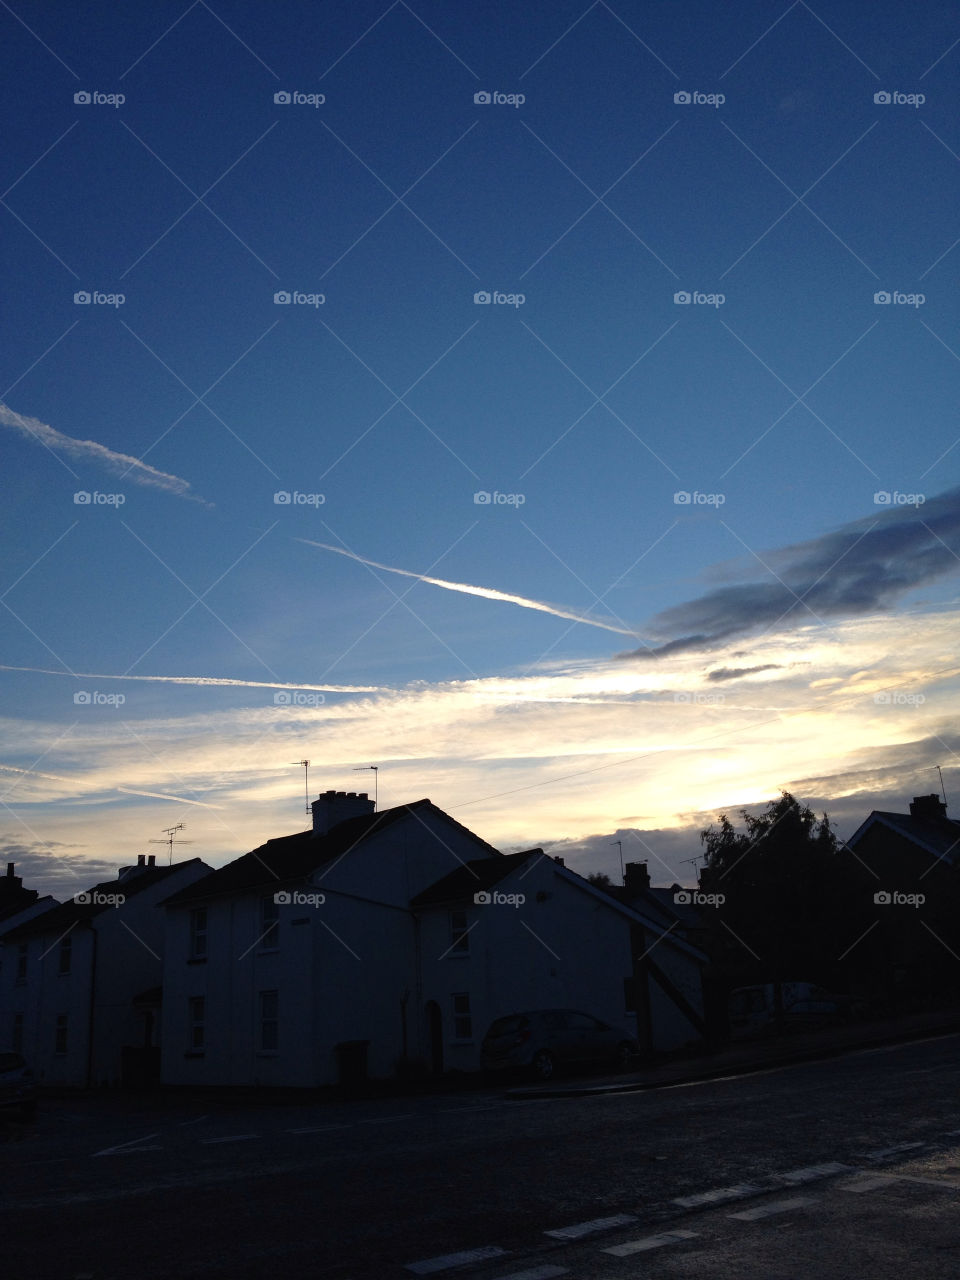 epsom sky morning clouds by ShutterBug_NikonGirl